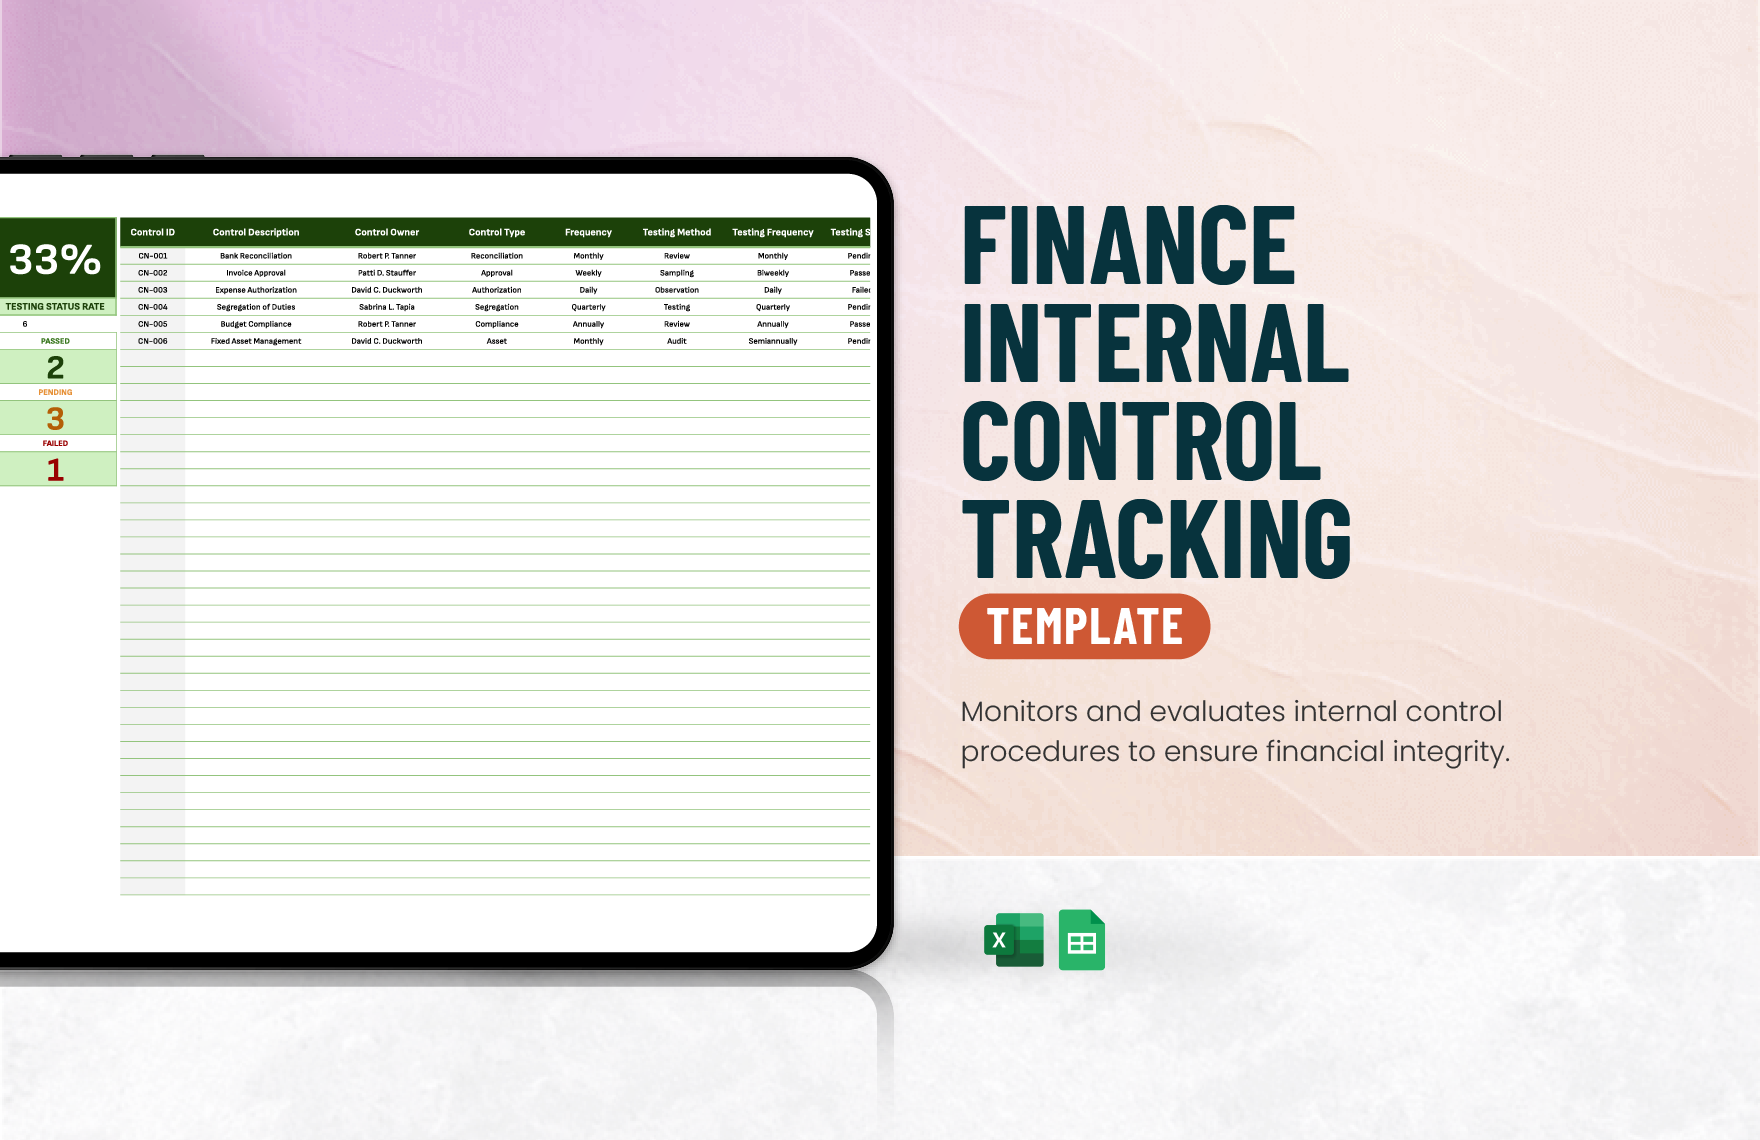 Finance Internal Control Tracking Template